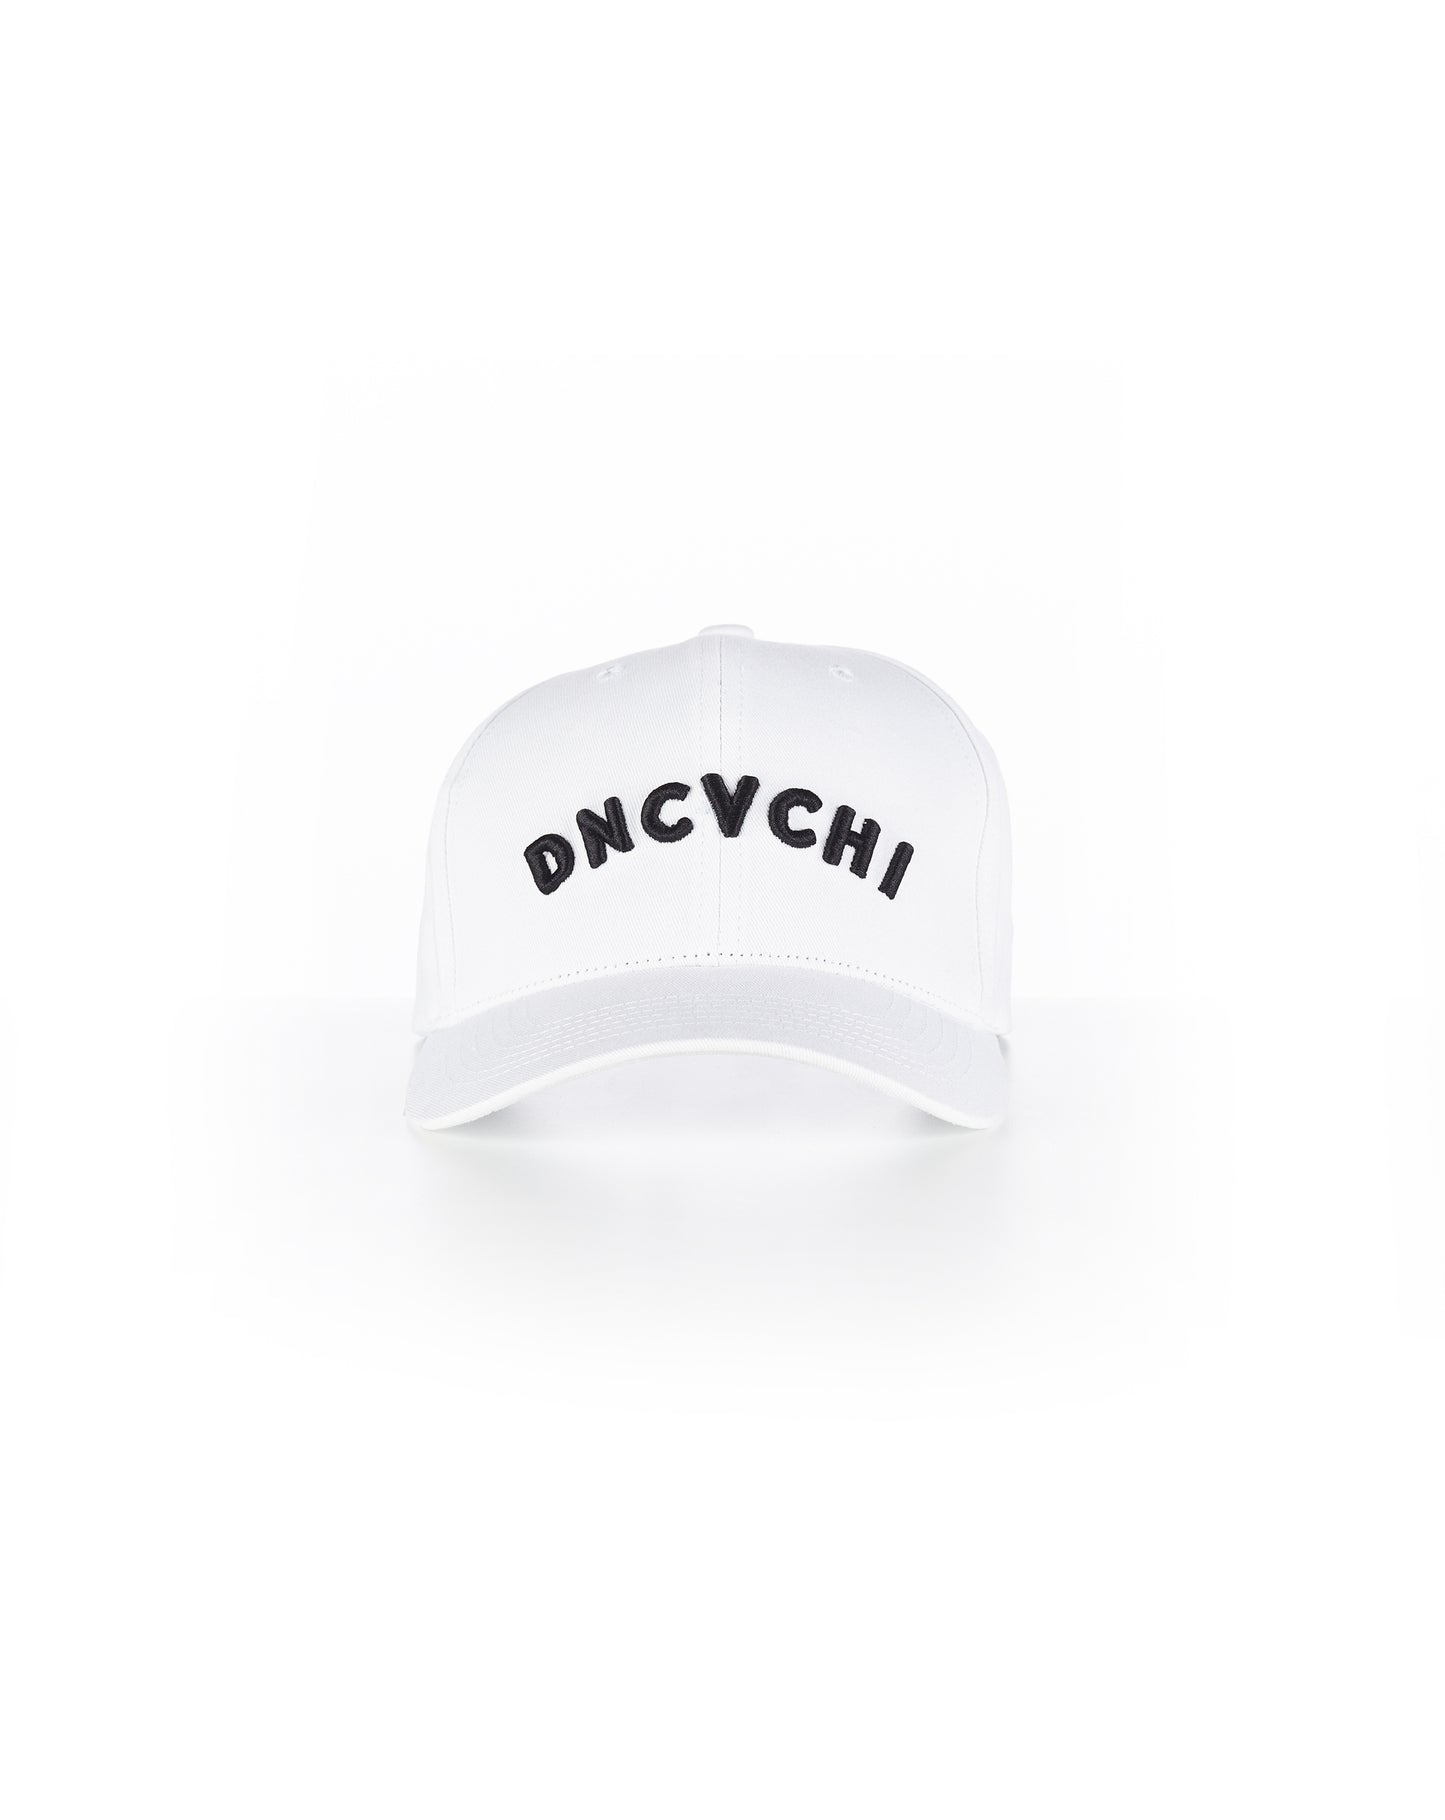 DNCVCHI - WHITE/BLACK BASEBALL CAP